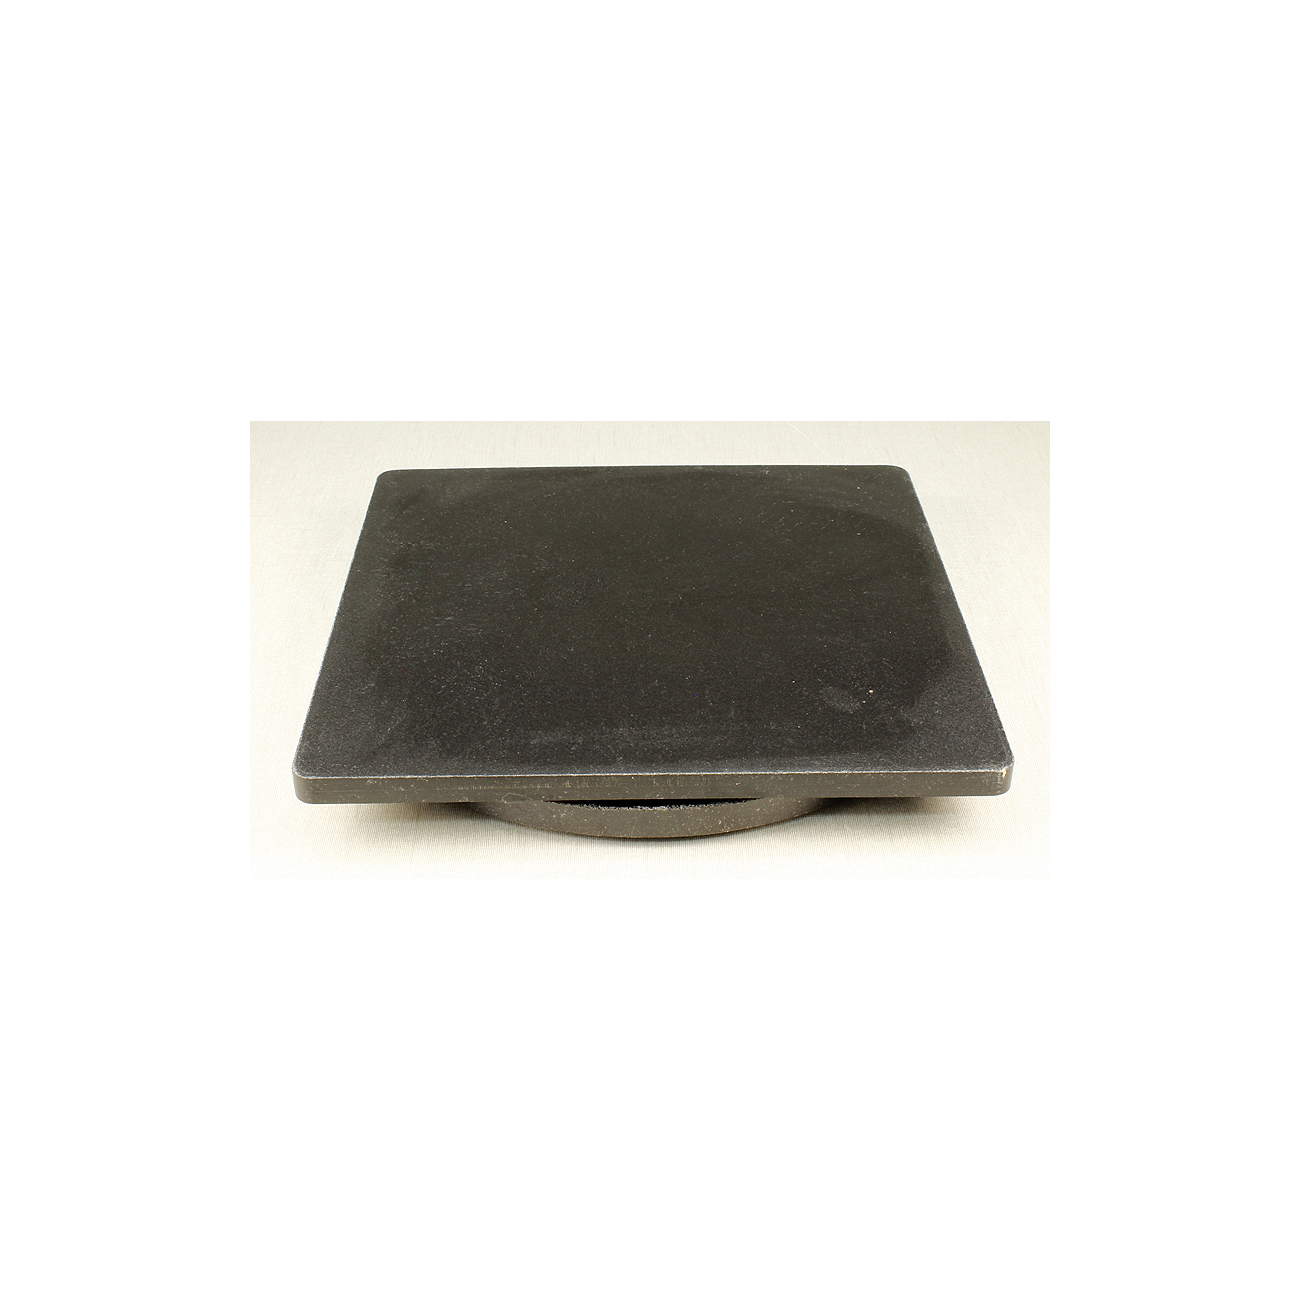 Kaneshin square resin turntable HQ 30 cm